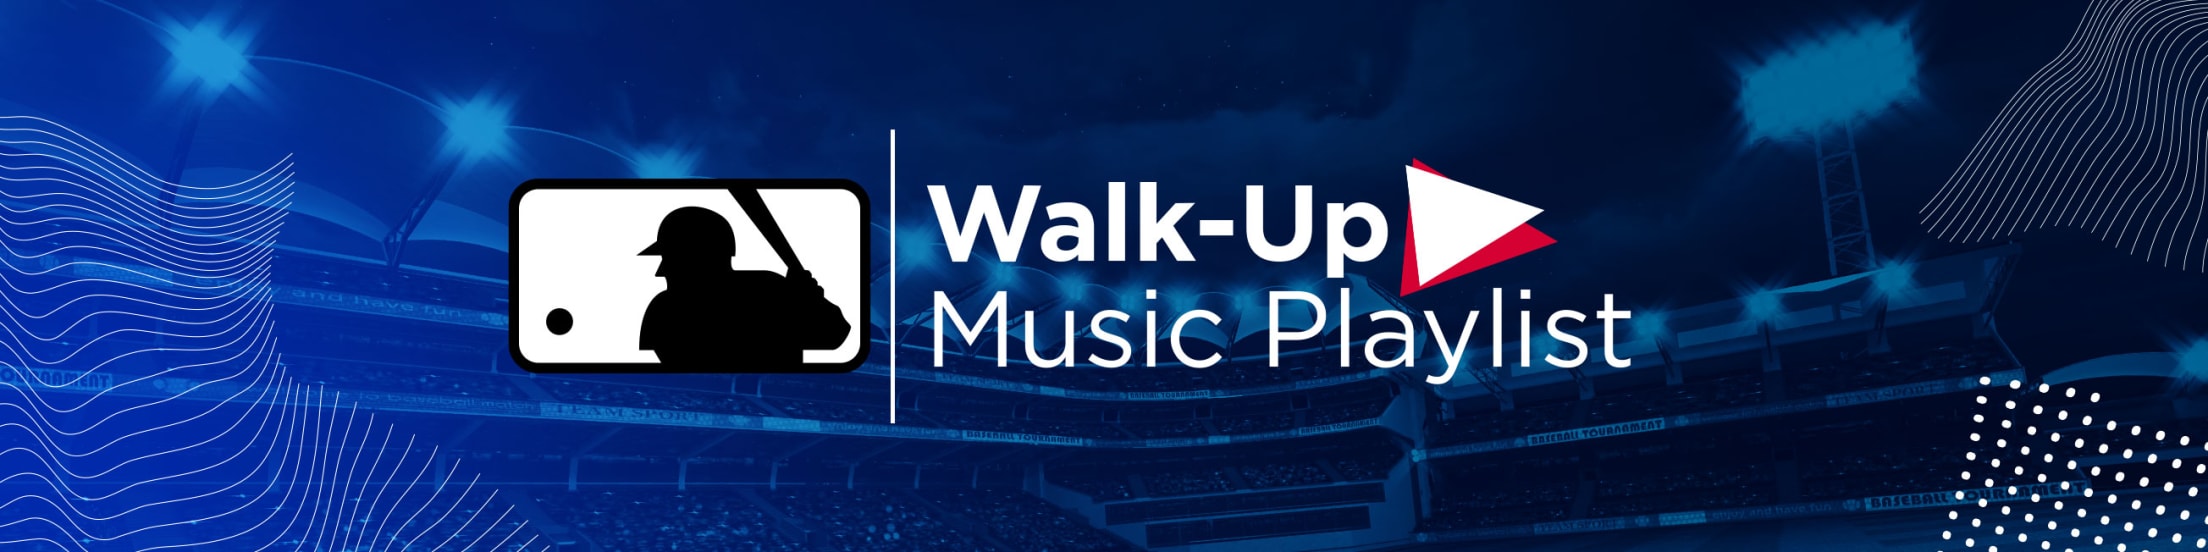 MLB WalkUp Music Playlist